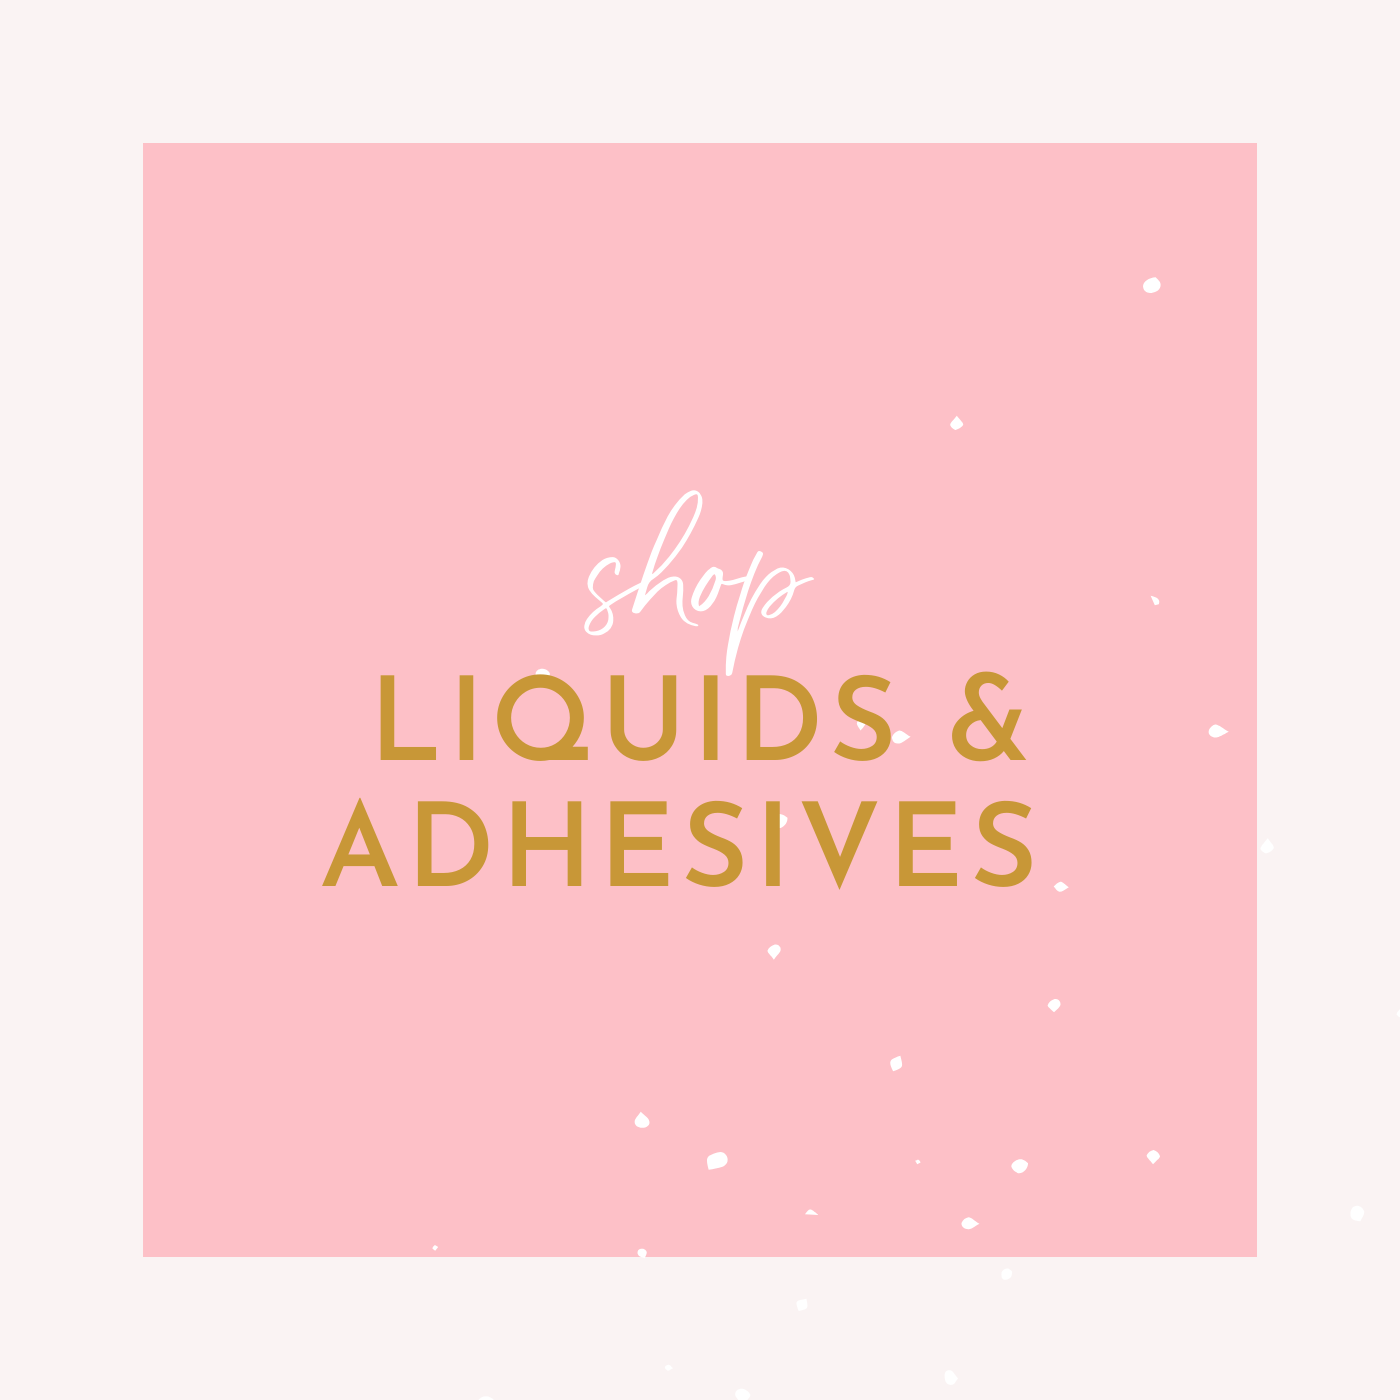 Adhesives & Liquids